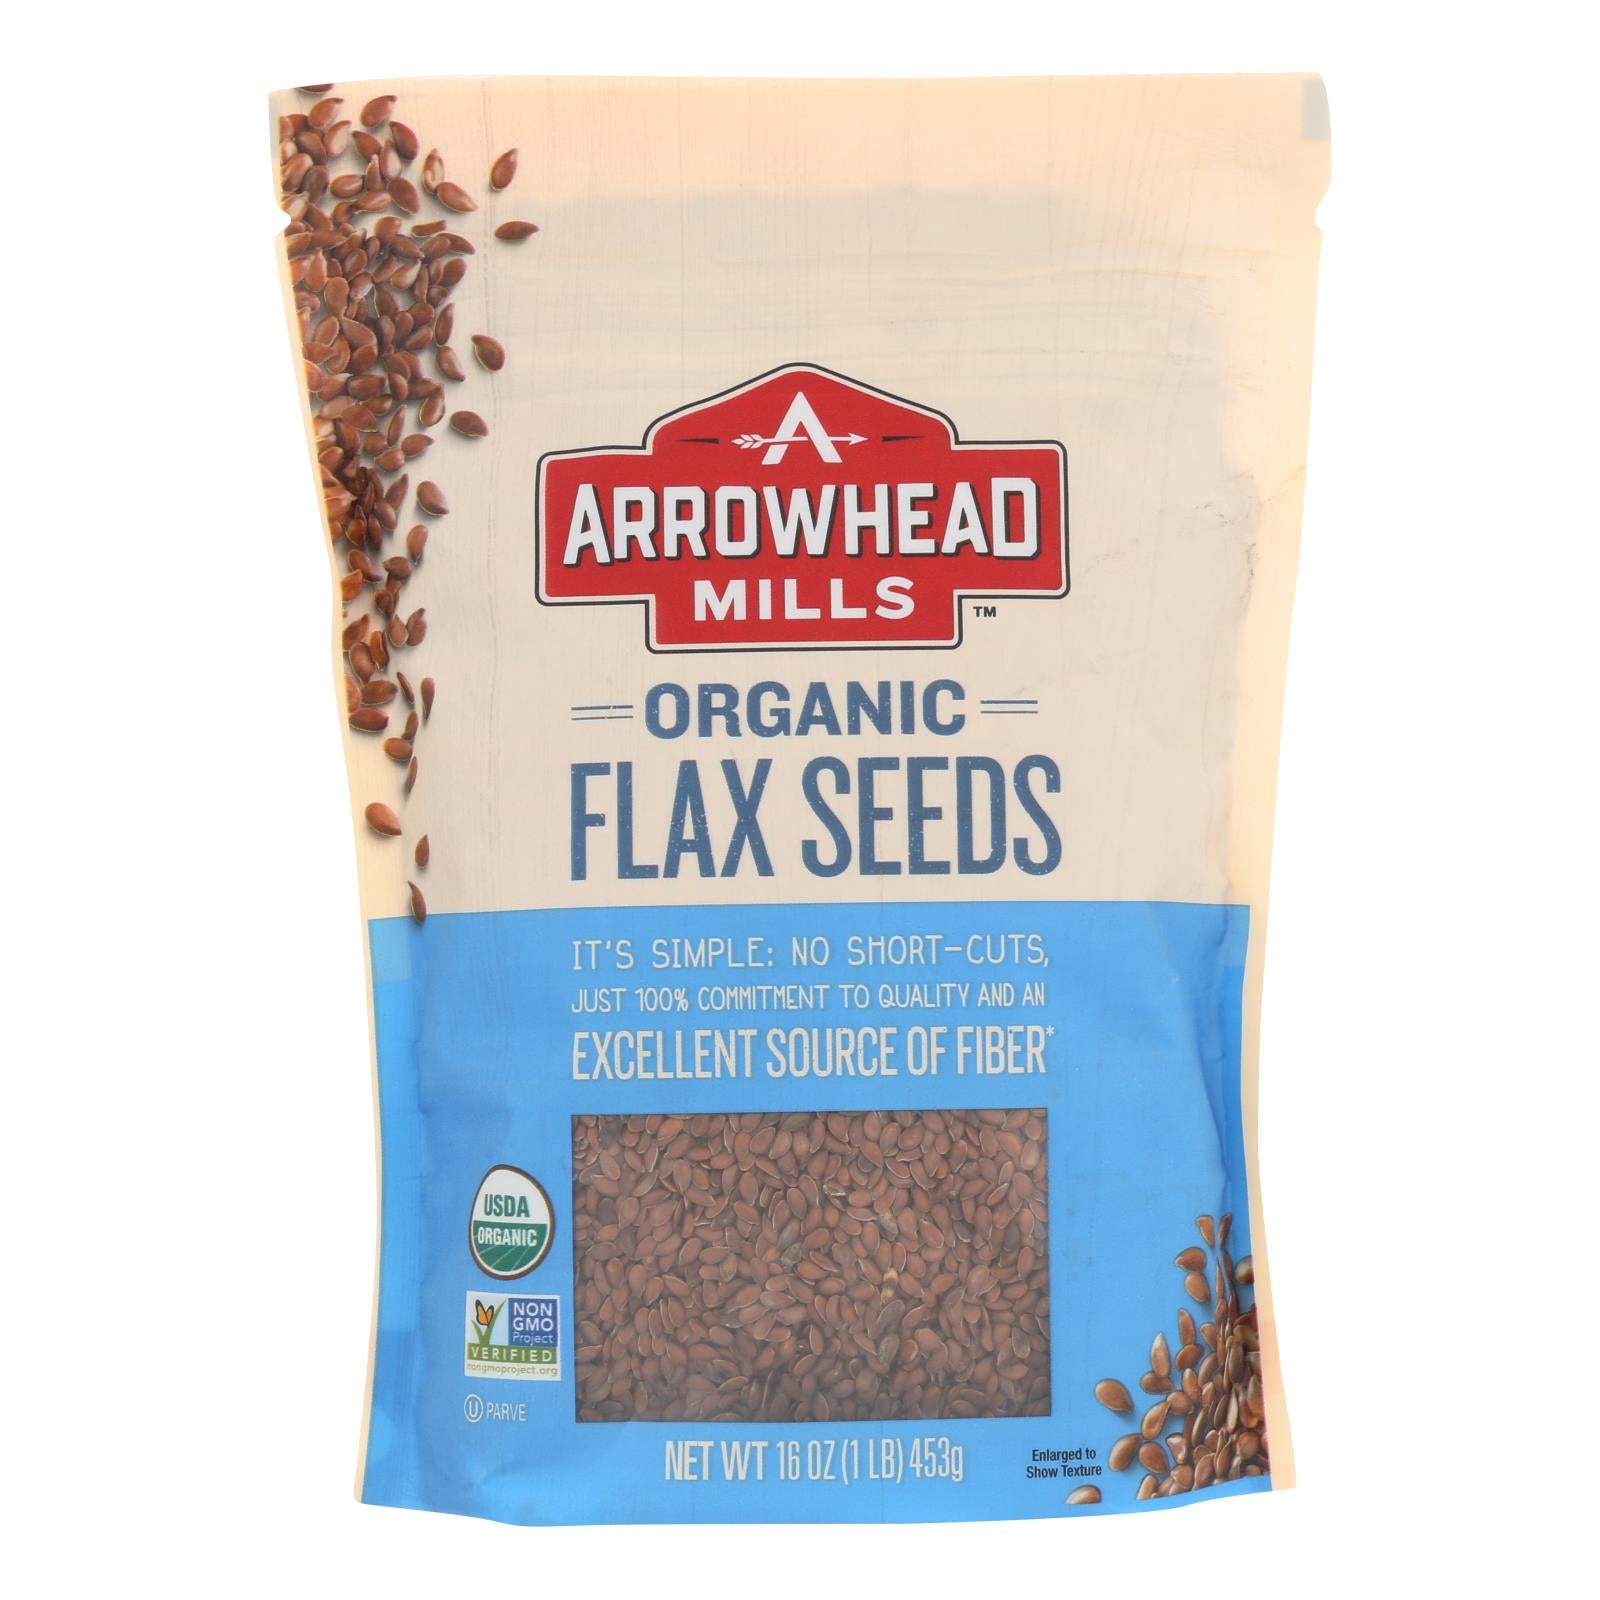 Arrowhead Mills, Arrowhead Mills - Organic Flax Seeds - Case of 6 - 16 oz. (Pack of 6)